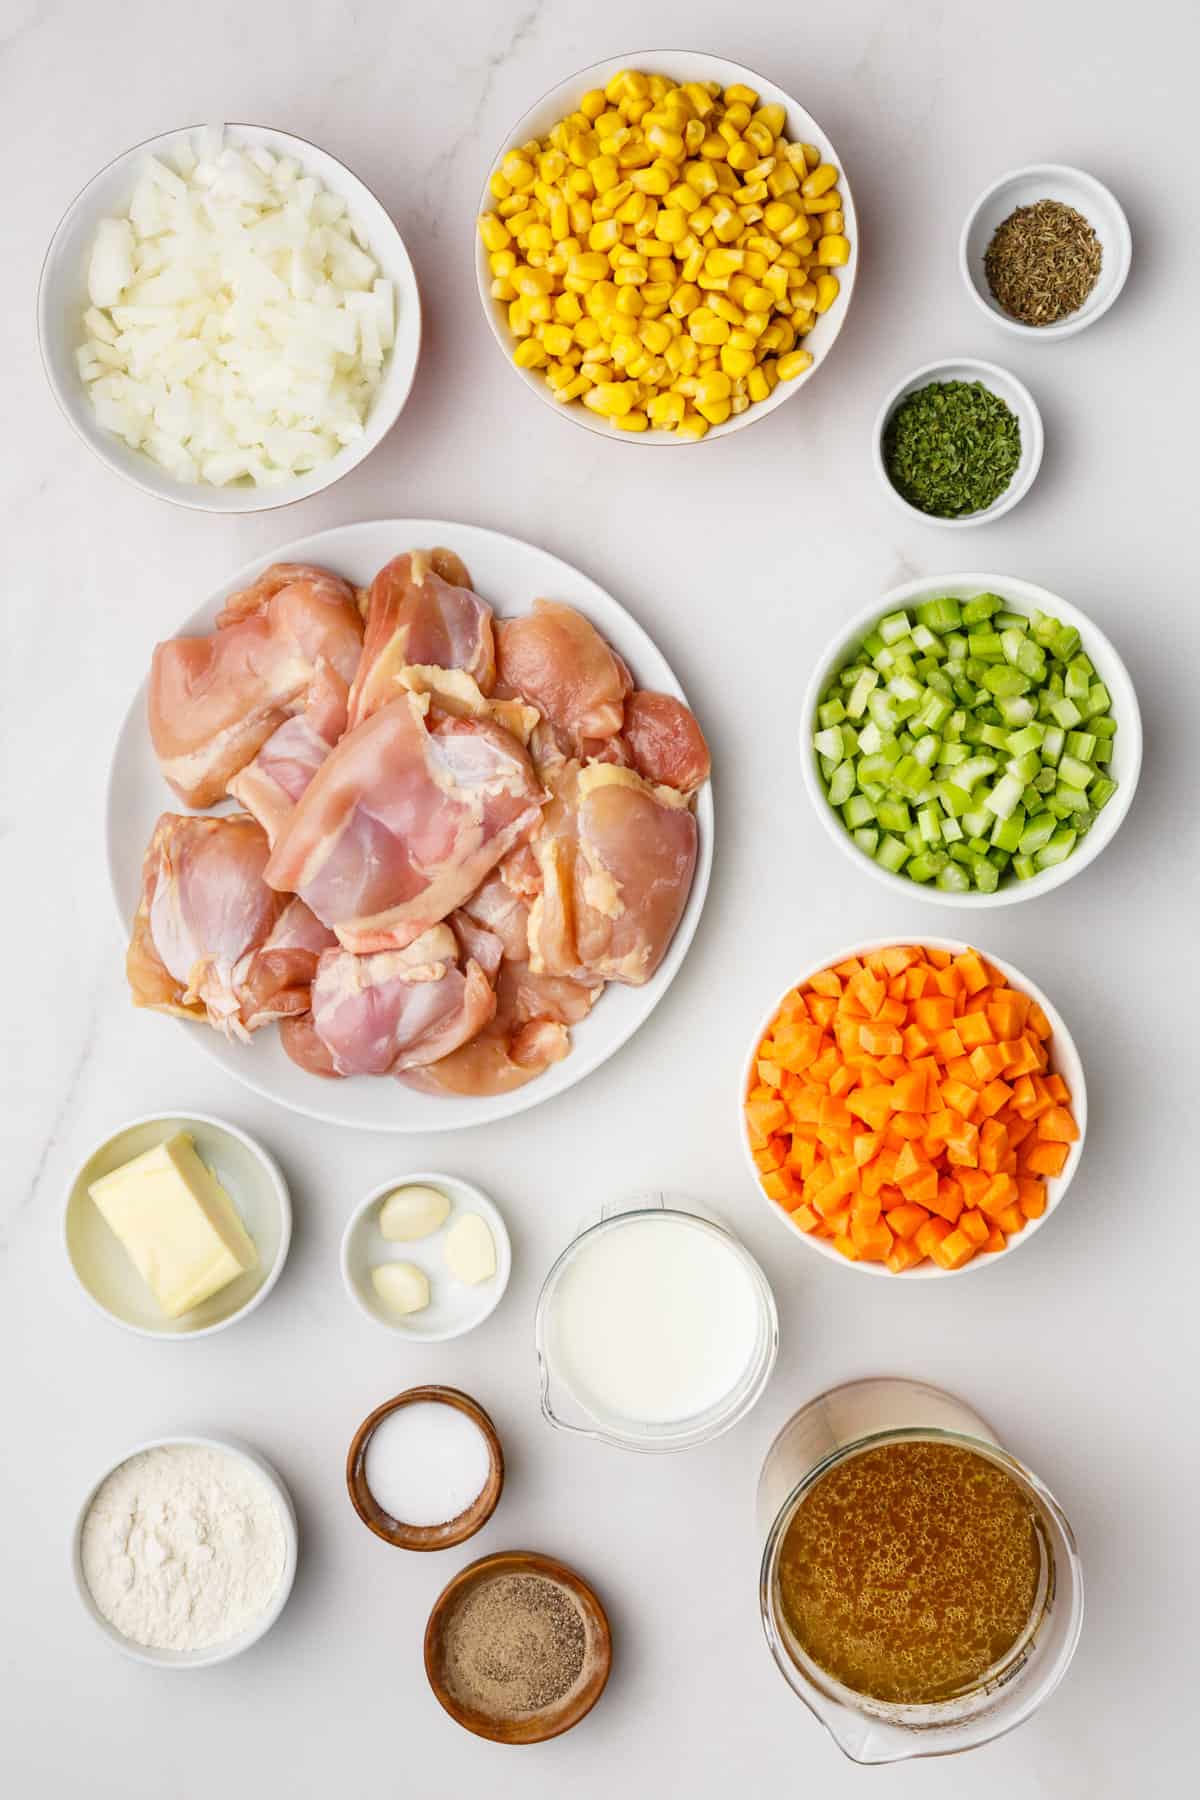 Ingredients to make chicken and dumplings.